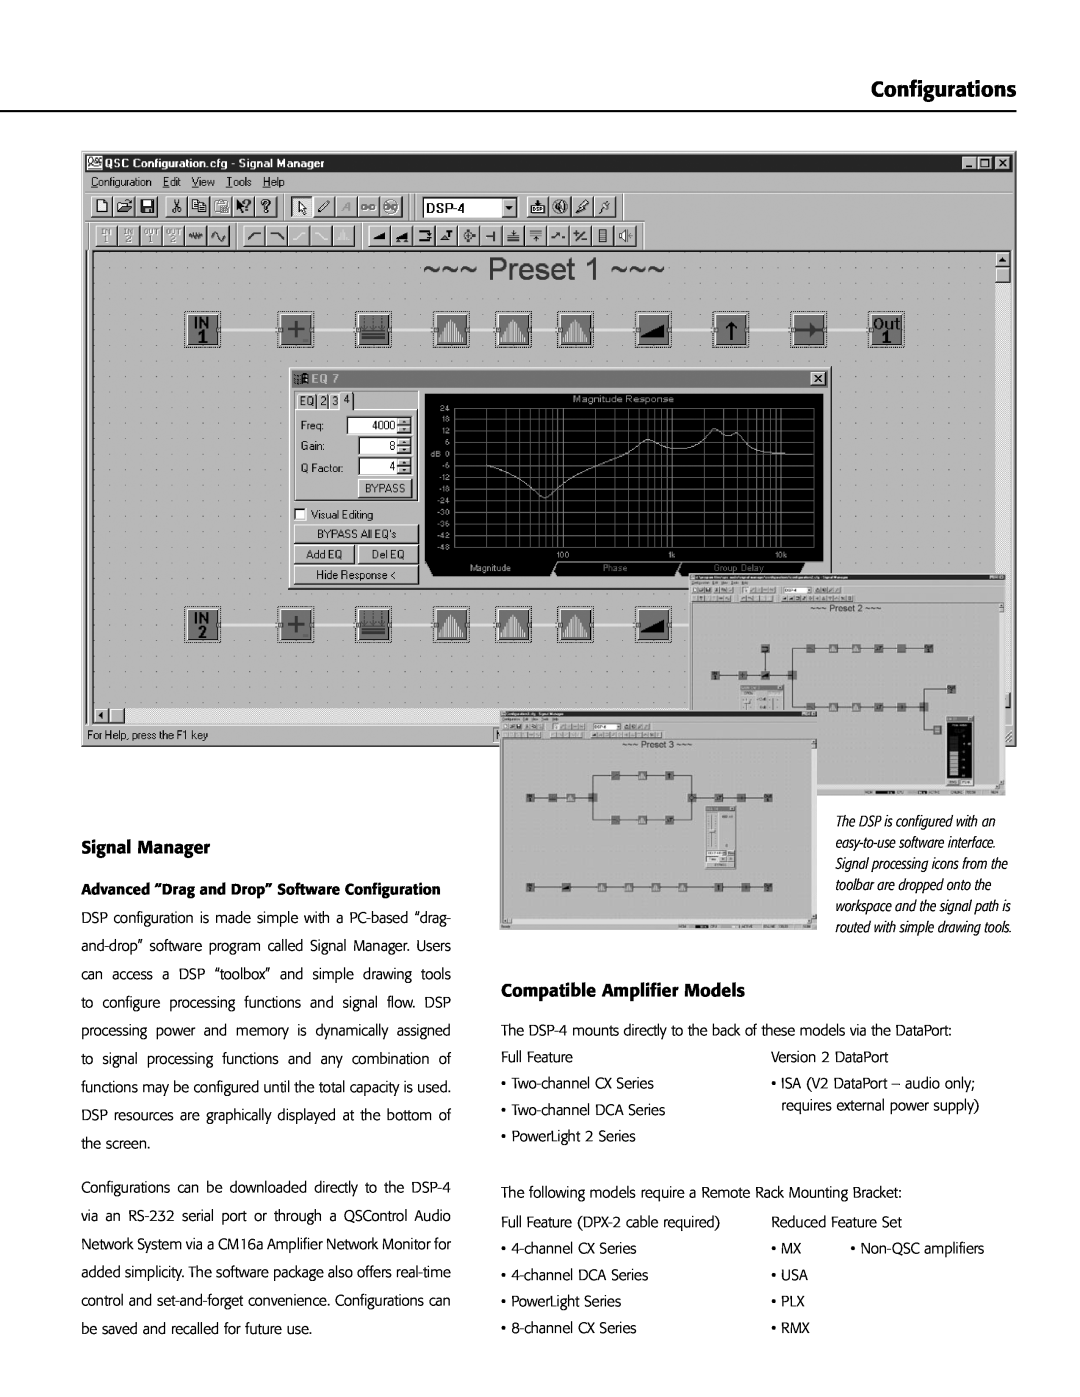 QSC Audio DSP-4 manual Configurations, Signal Manager, Compatible Amplifier Models 